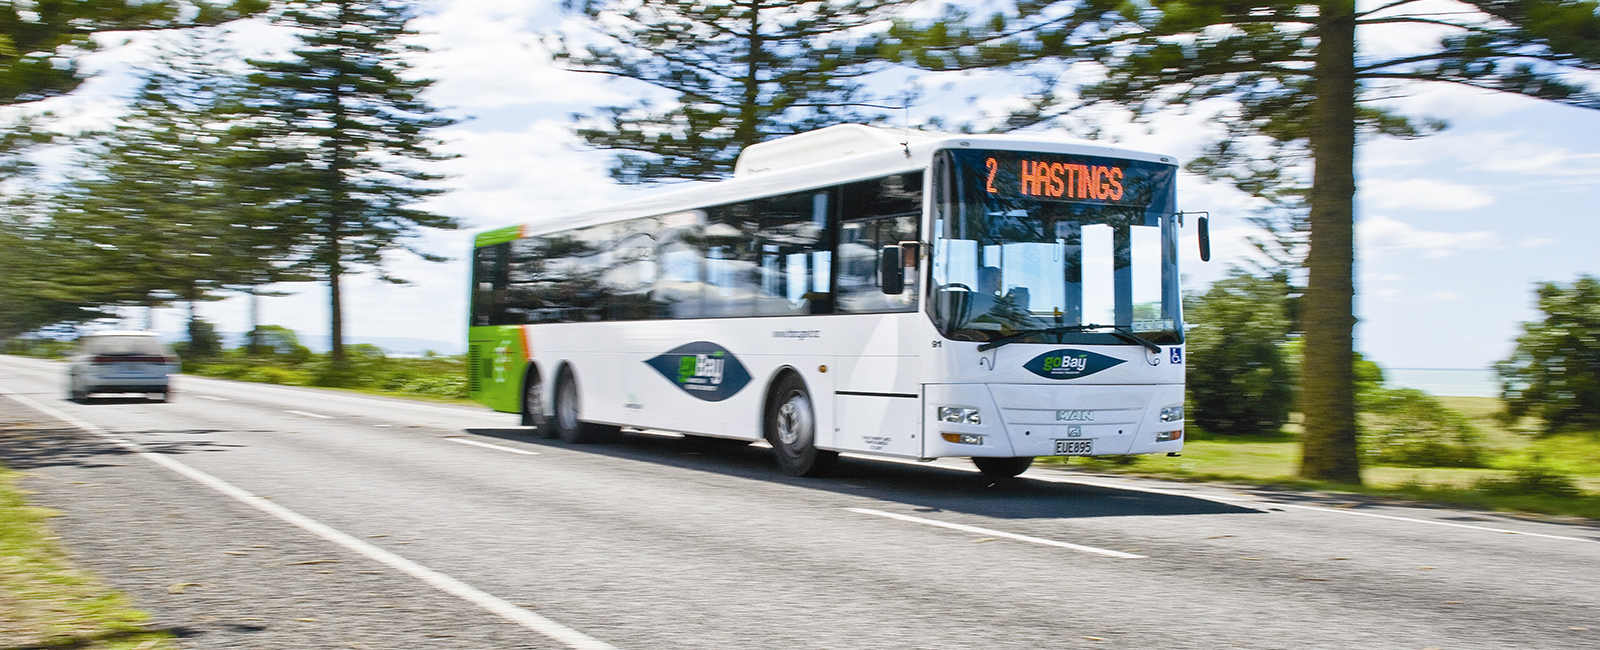 Public Transport Services in Hawke's Bay, New Zealand @Hawke's Bay NZ